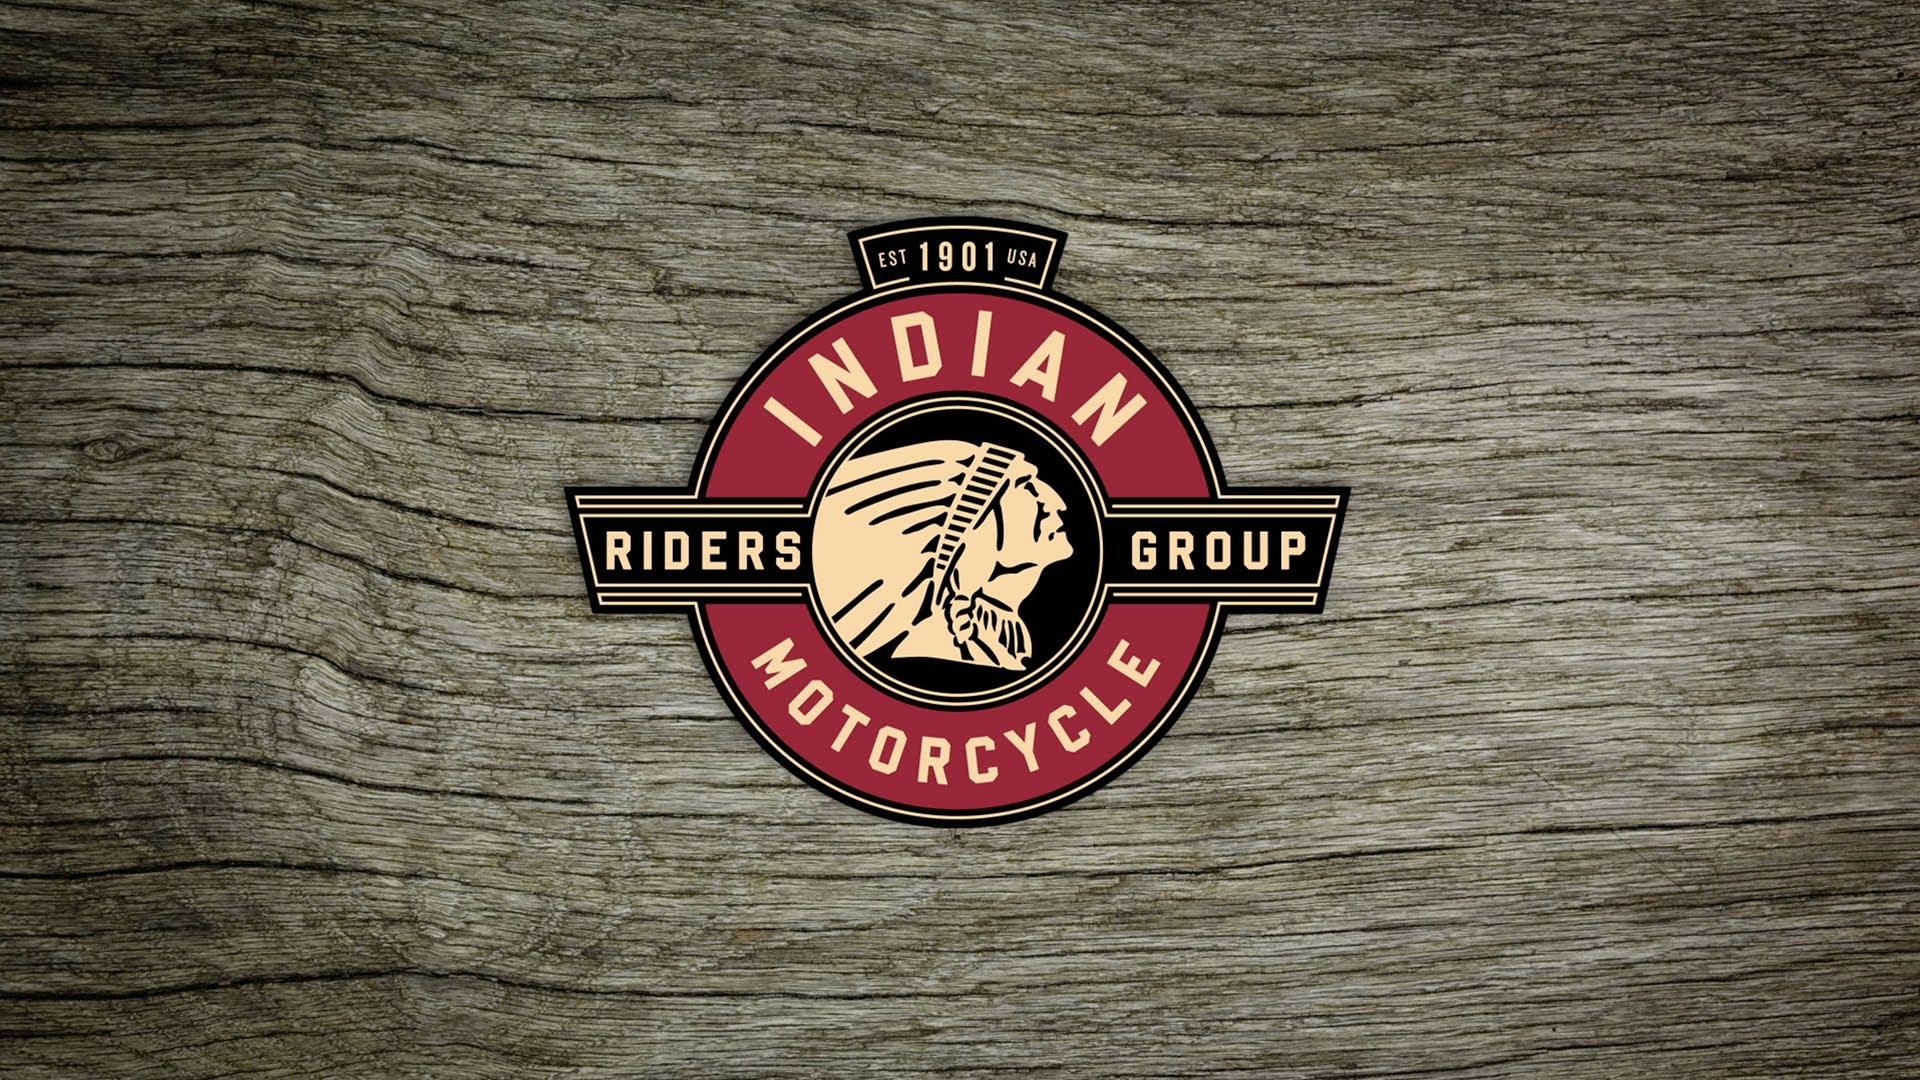 indian motorcycles logo wallpaper